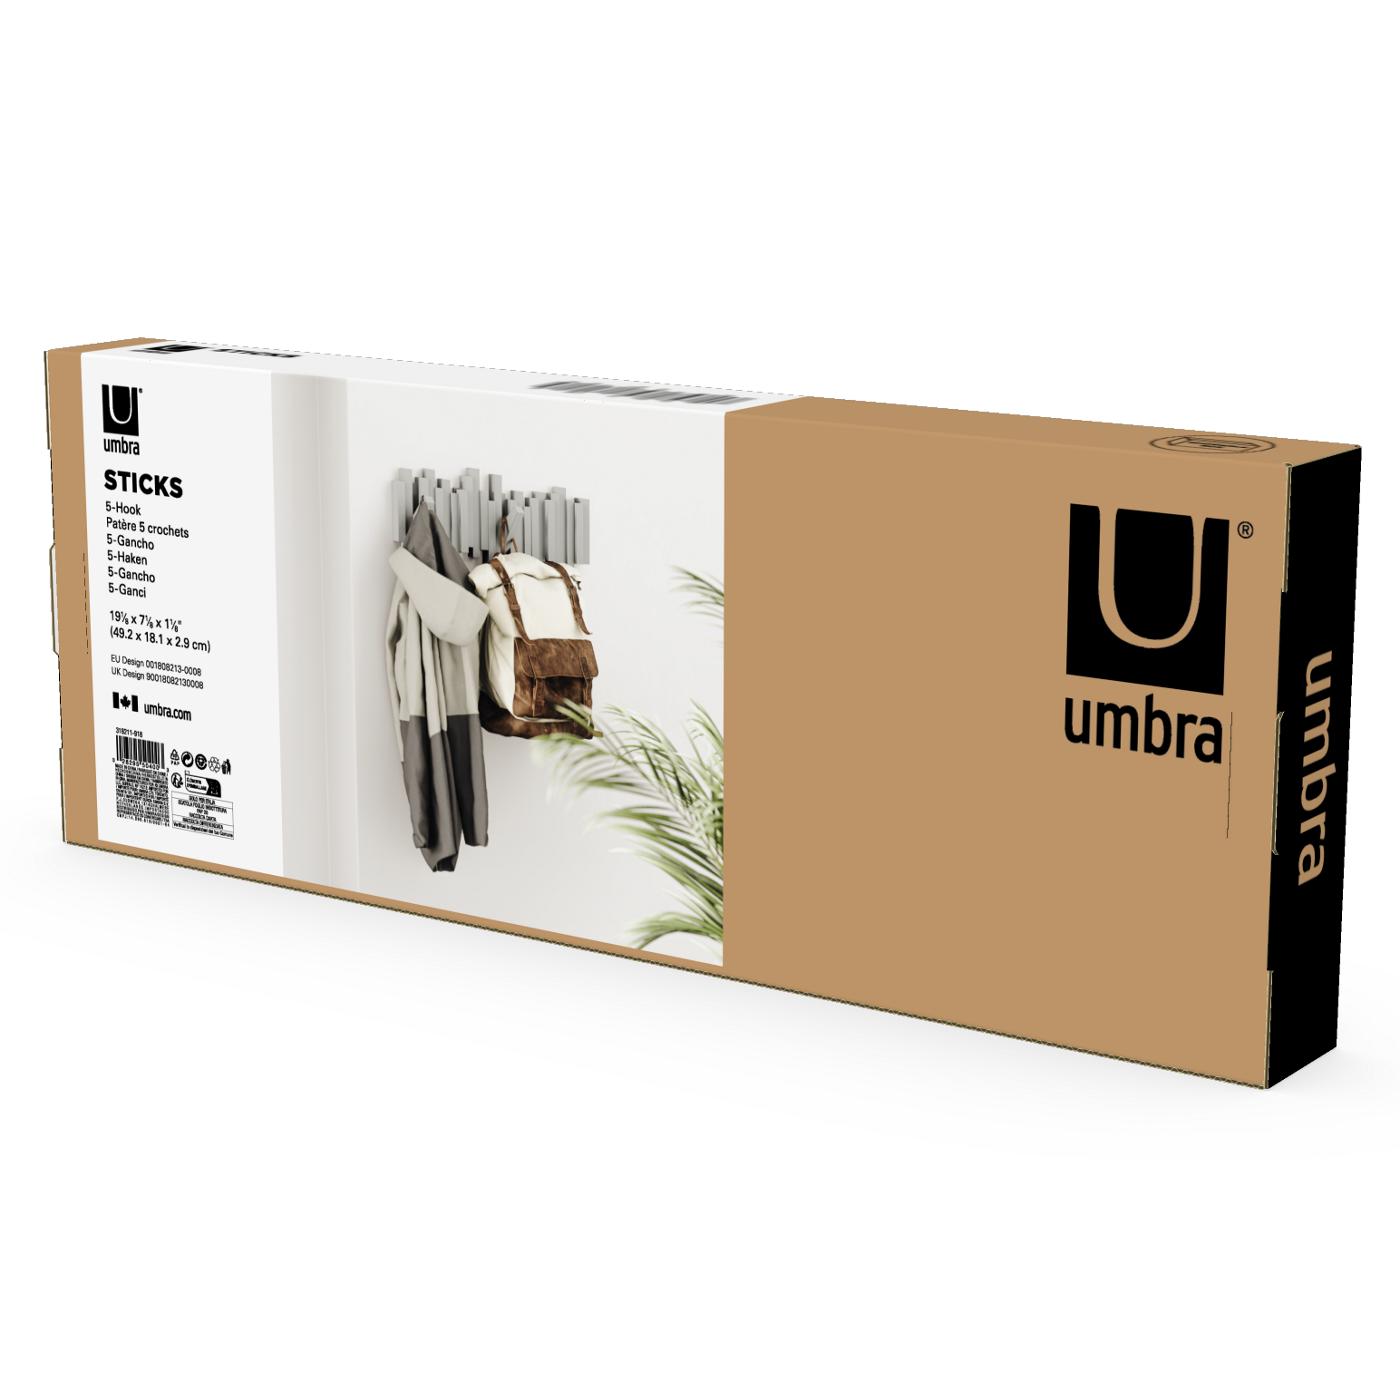 Umbra Sticks Multi Wall Hook - Grey; image 6 of 8